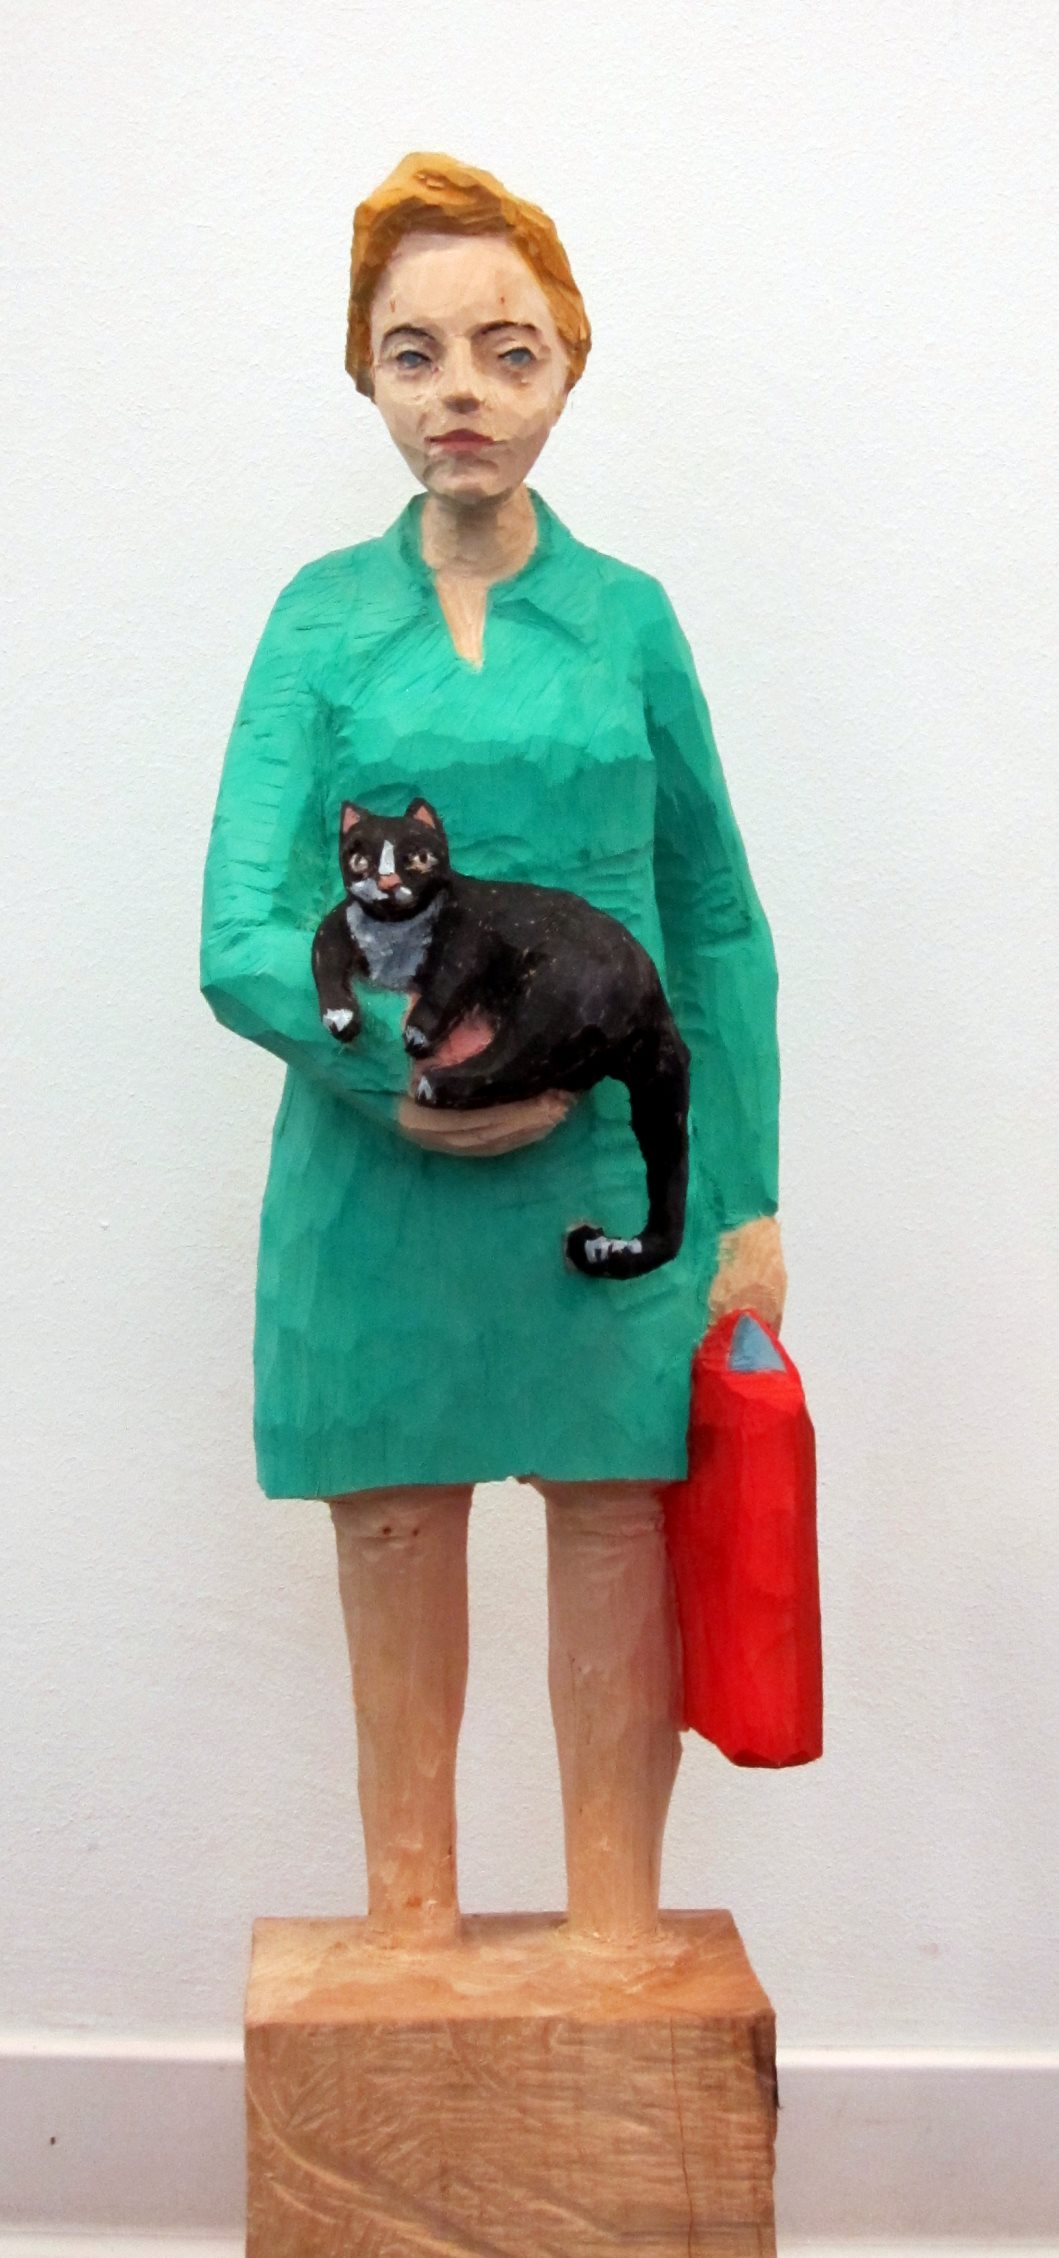 Edekafrau (1107) mit schwarzer Katze